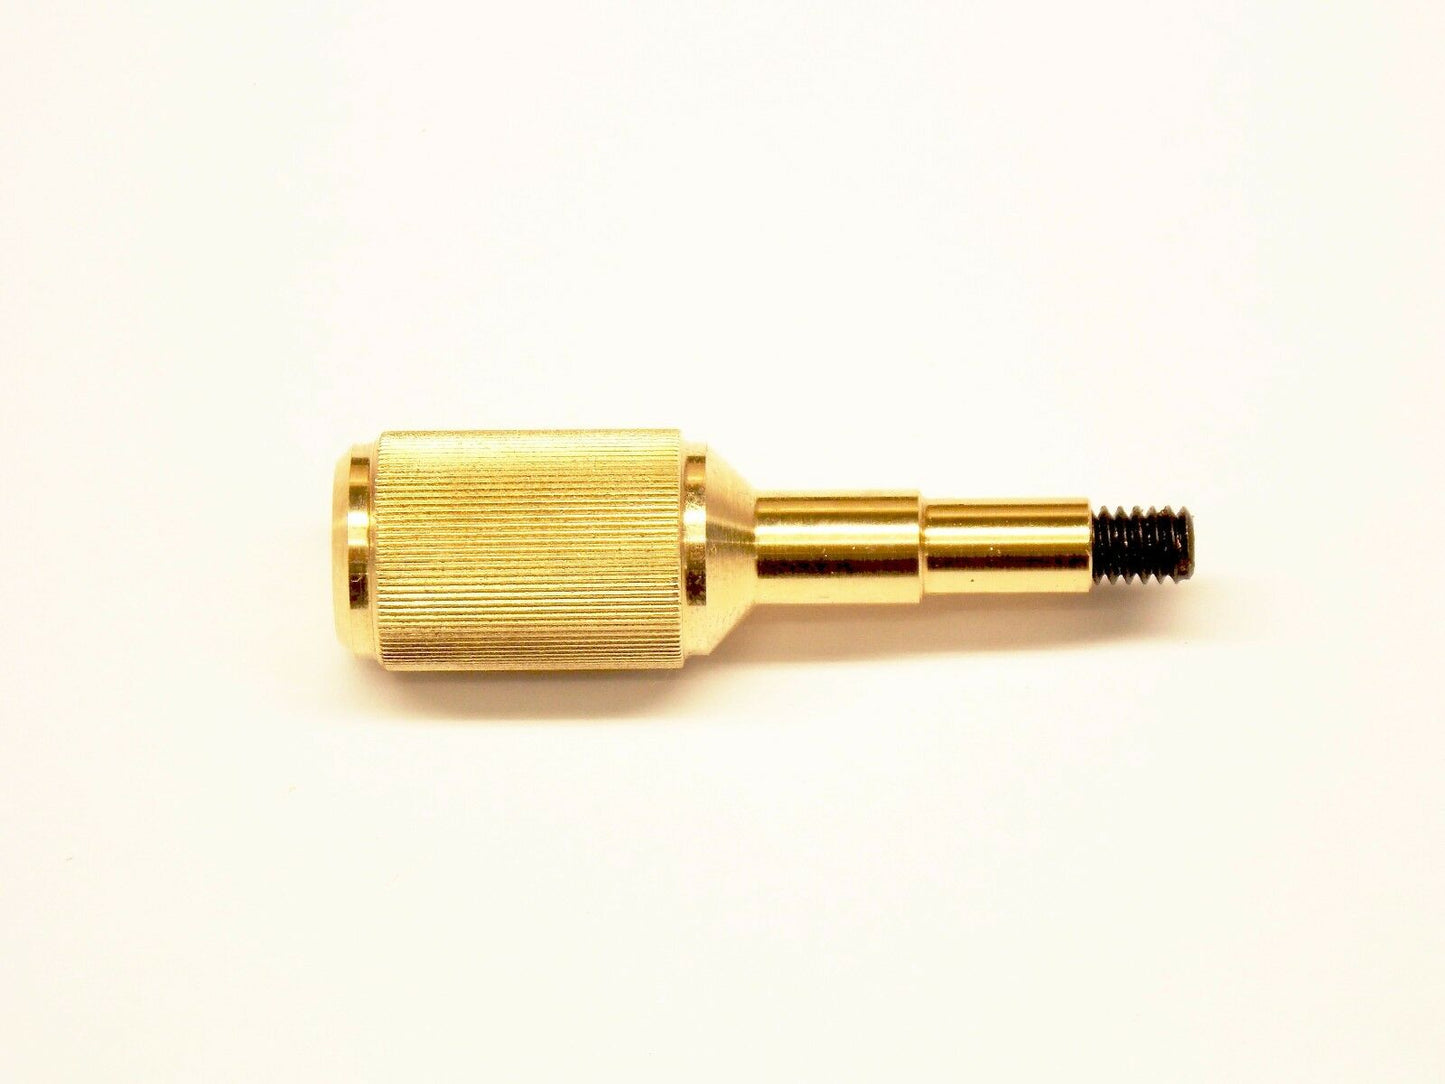 Brass probe handle Steel thread To Suit Crosman 2240-2250-2260-1377